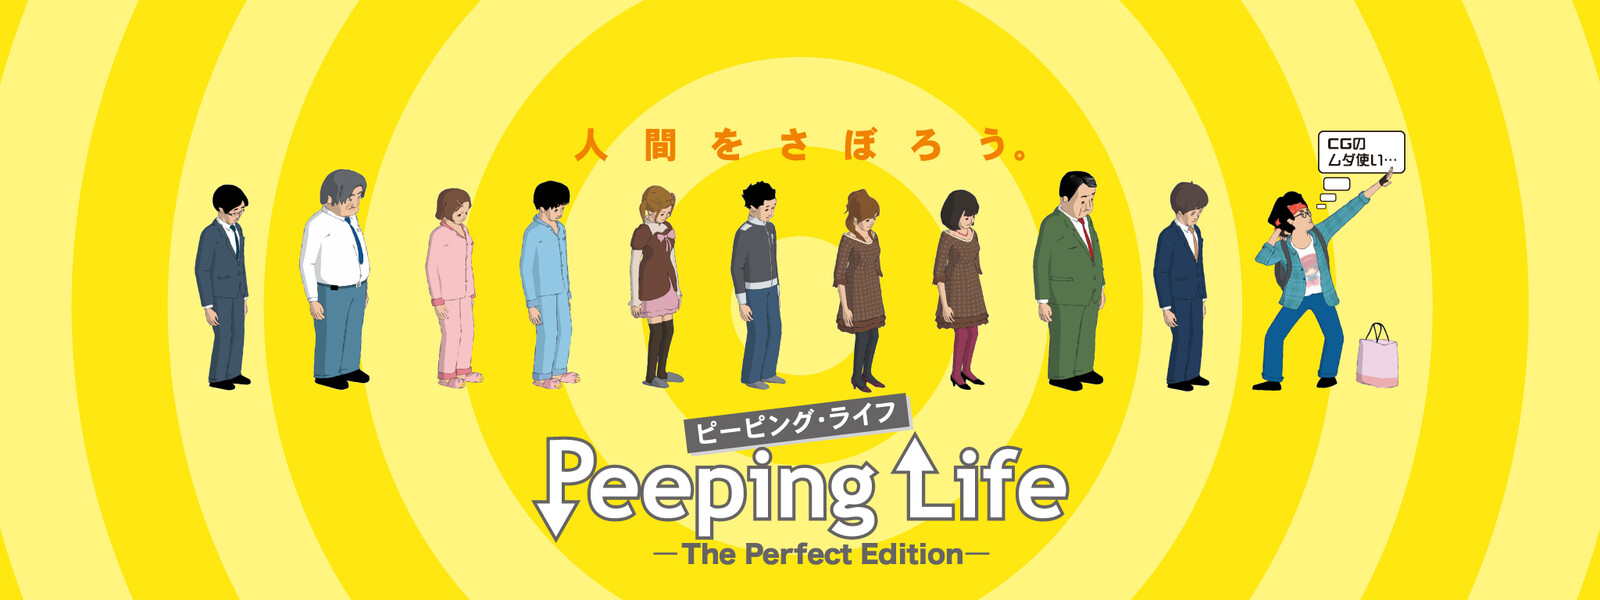 Peeping Life (ピーピング･ライフ) -The Perfect Edition- イエロー盤の動画 - Peeping Life (ピーピング・ライフ) -手塚プロ・タツノコプロワンダーランド-